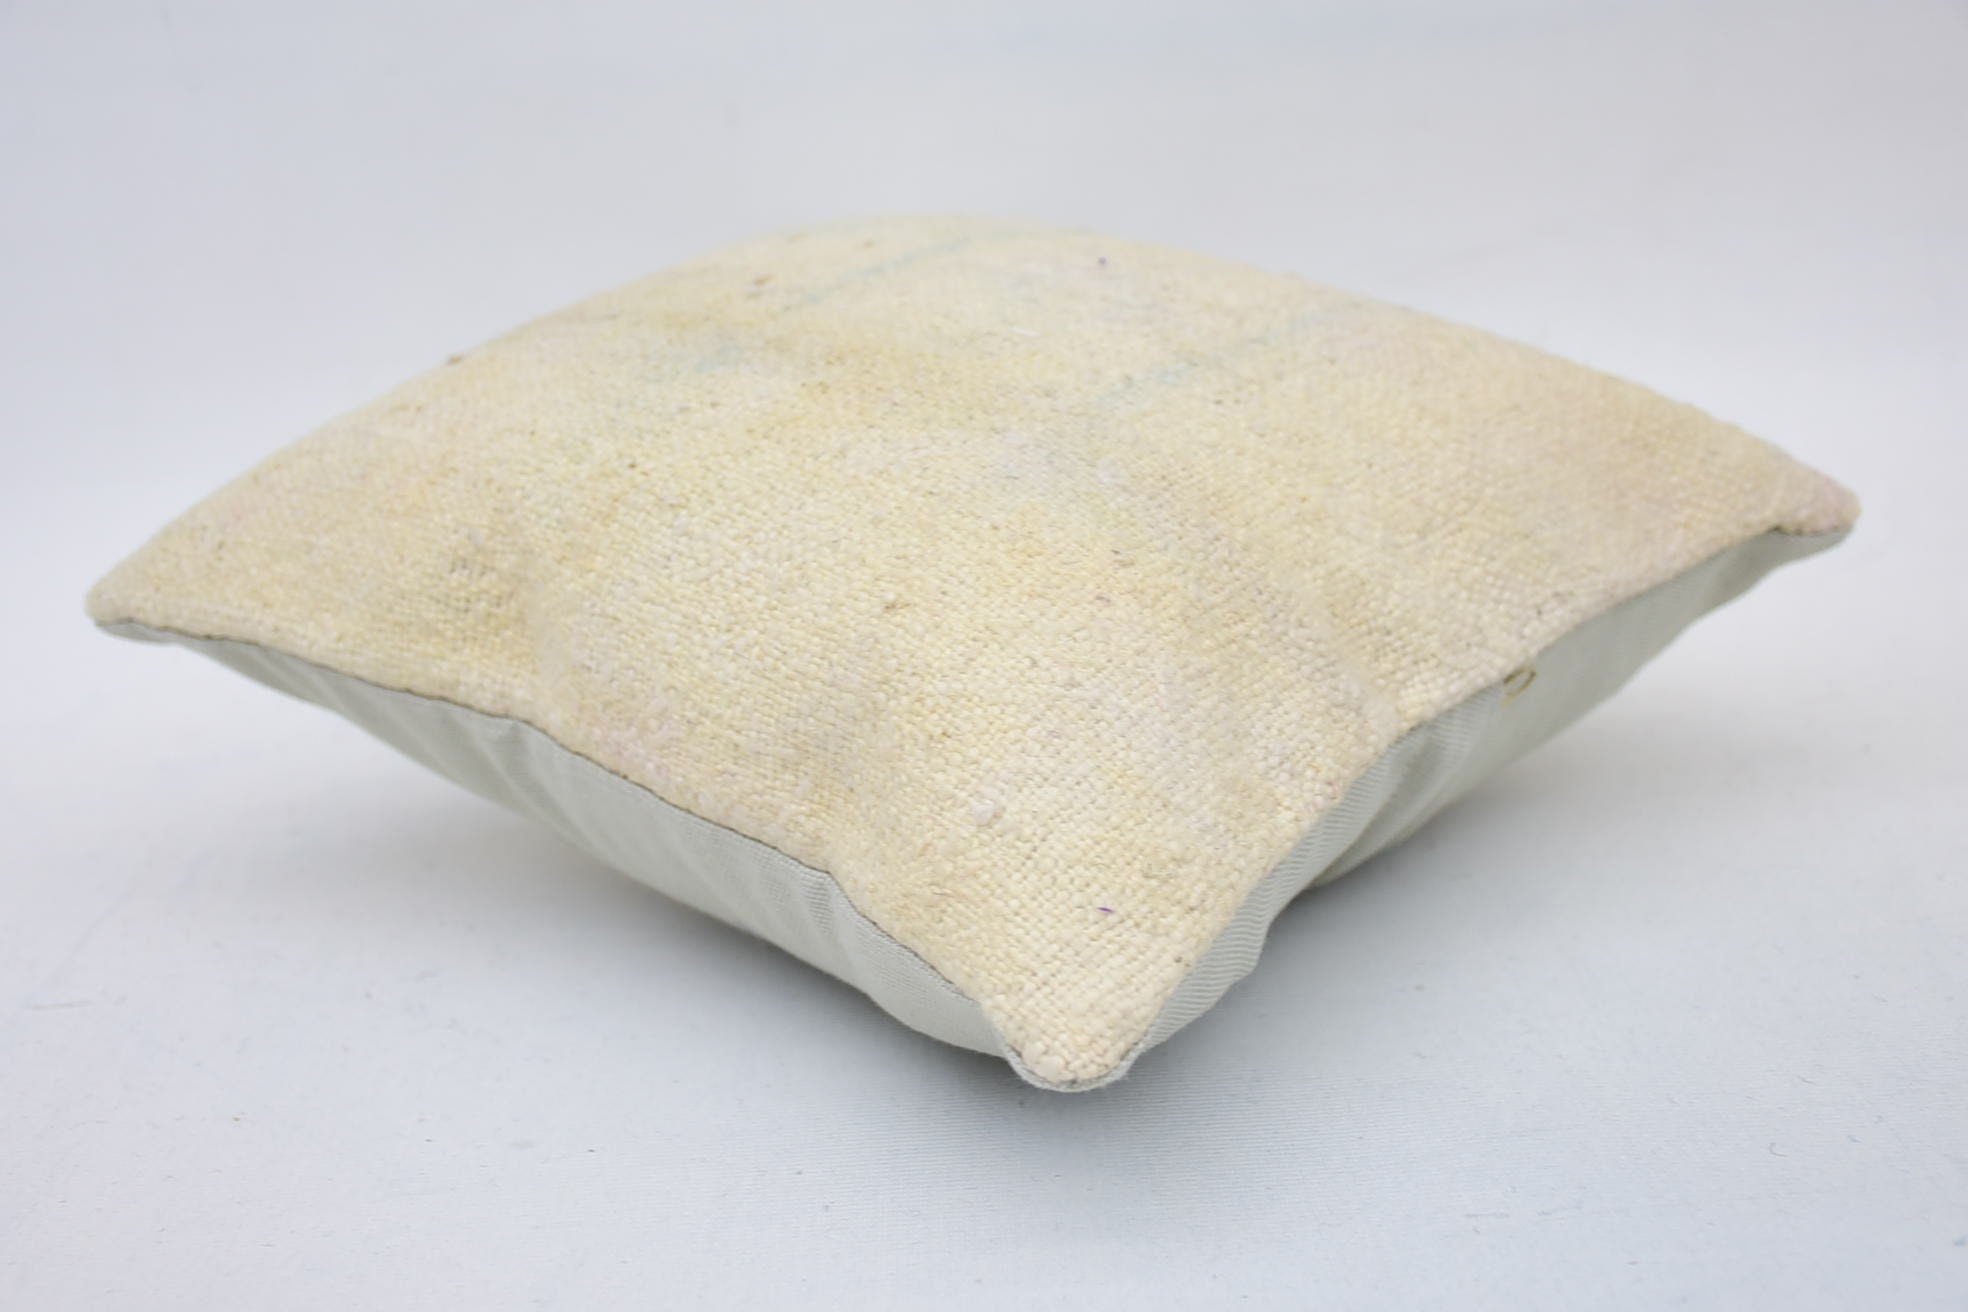 Ethnical Kilim Rug Pillow, Personalized Gift Pillow Pillow Case, Handmade Kilim Cushion, 12"x12" Beige Cushion, Pillow for Sofa